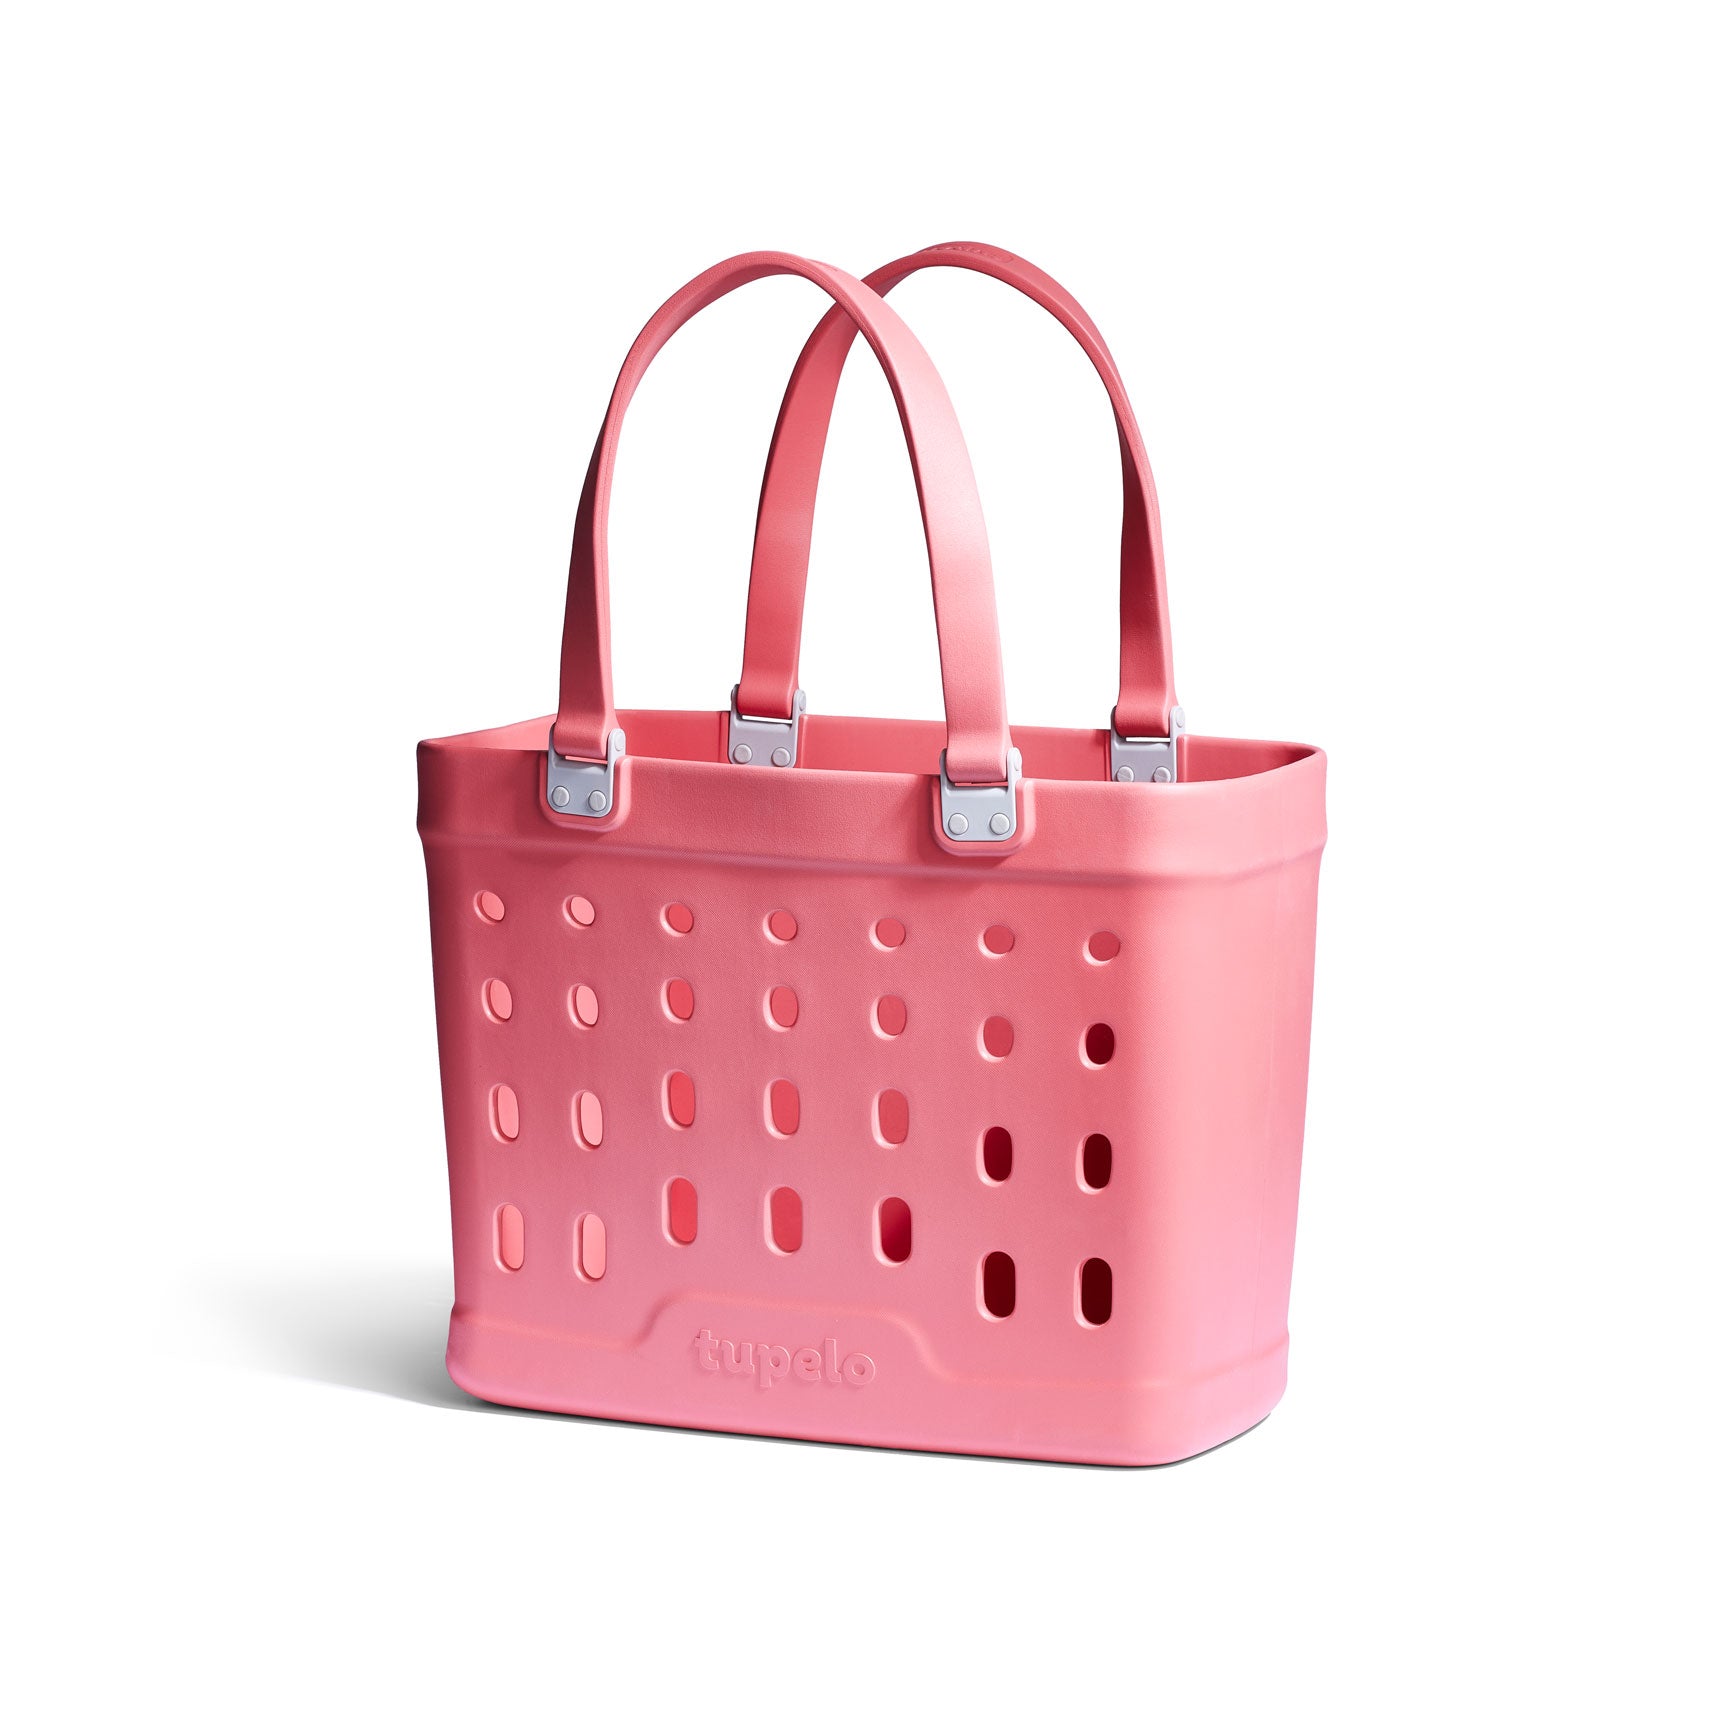 HANDWOVEN RECYCLED PLASTIC TOTE, Summer Bag, Beach Bag, Oaxaca Style | eBay